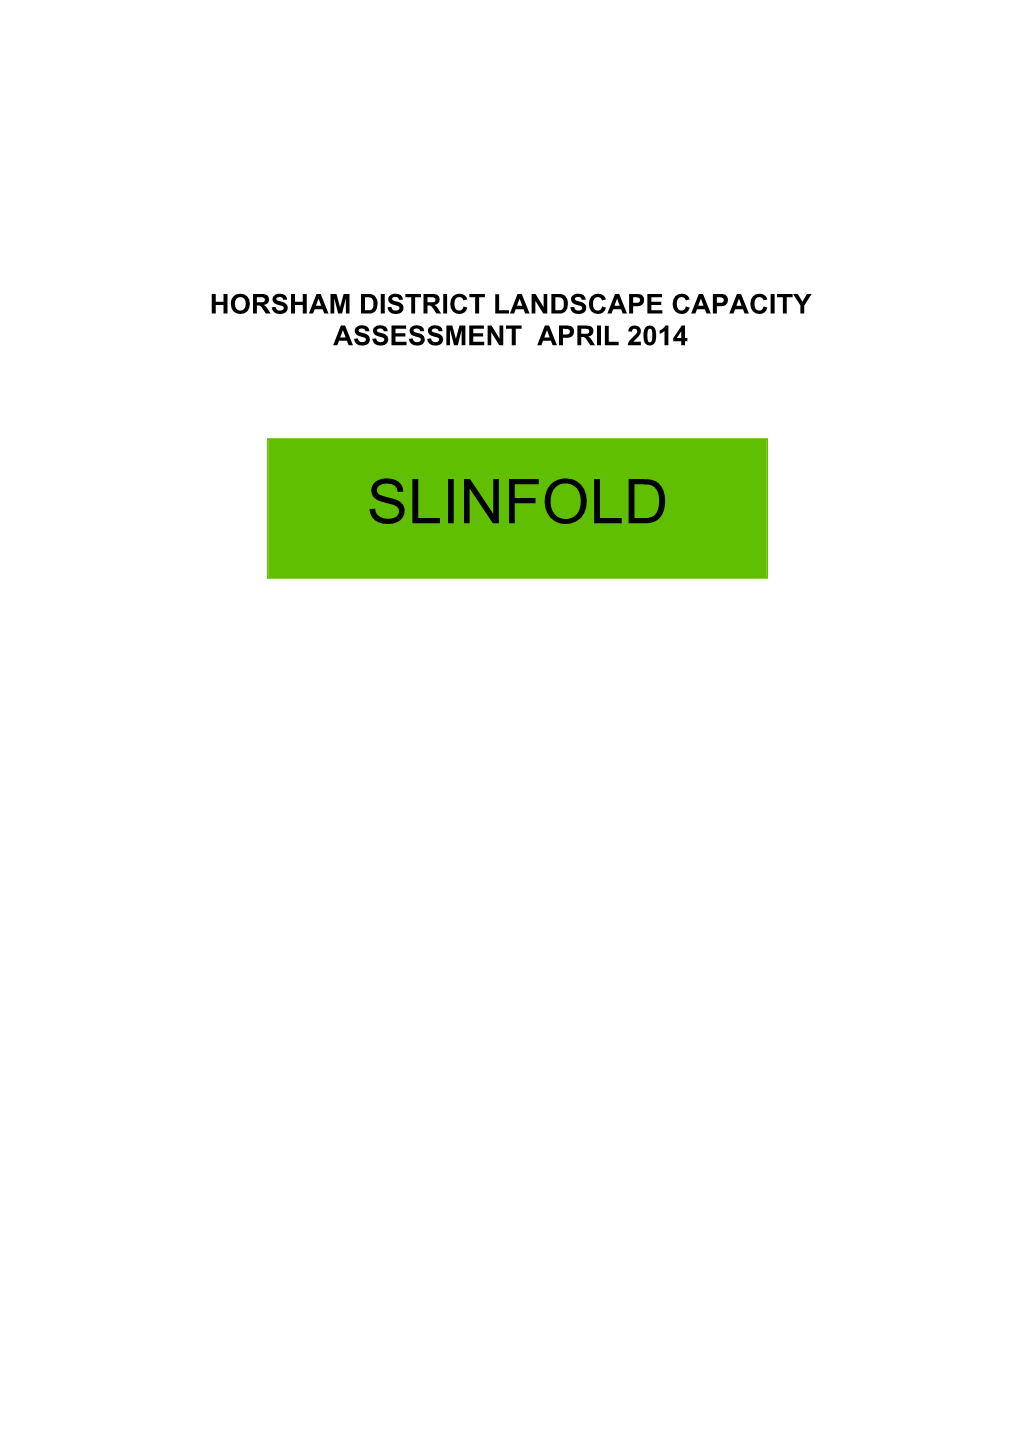 Horsham District Landscape Capacity Assessment April 2014